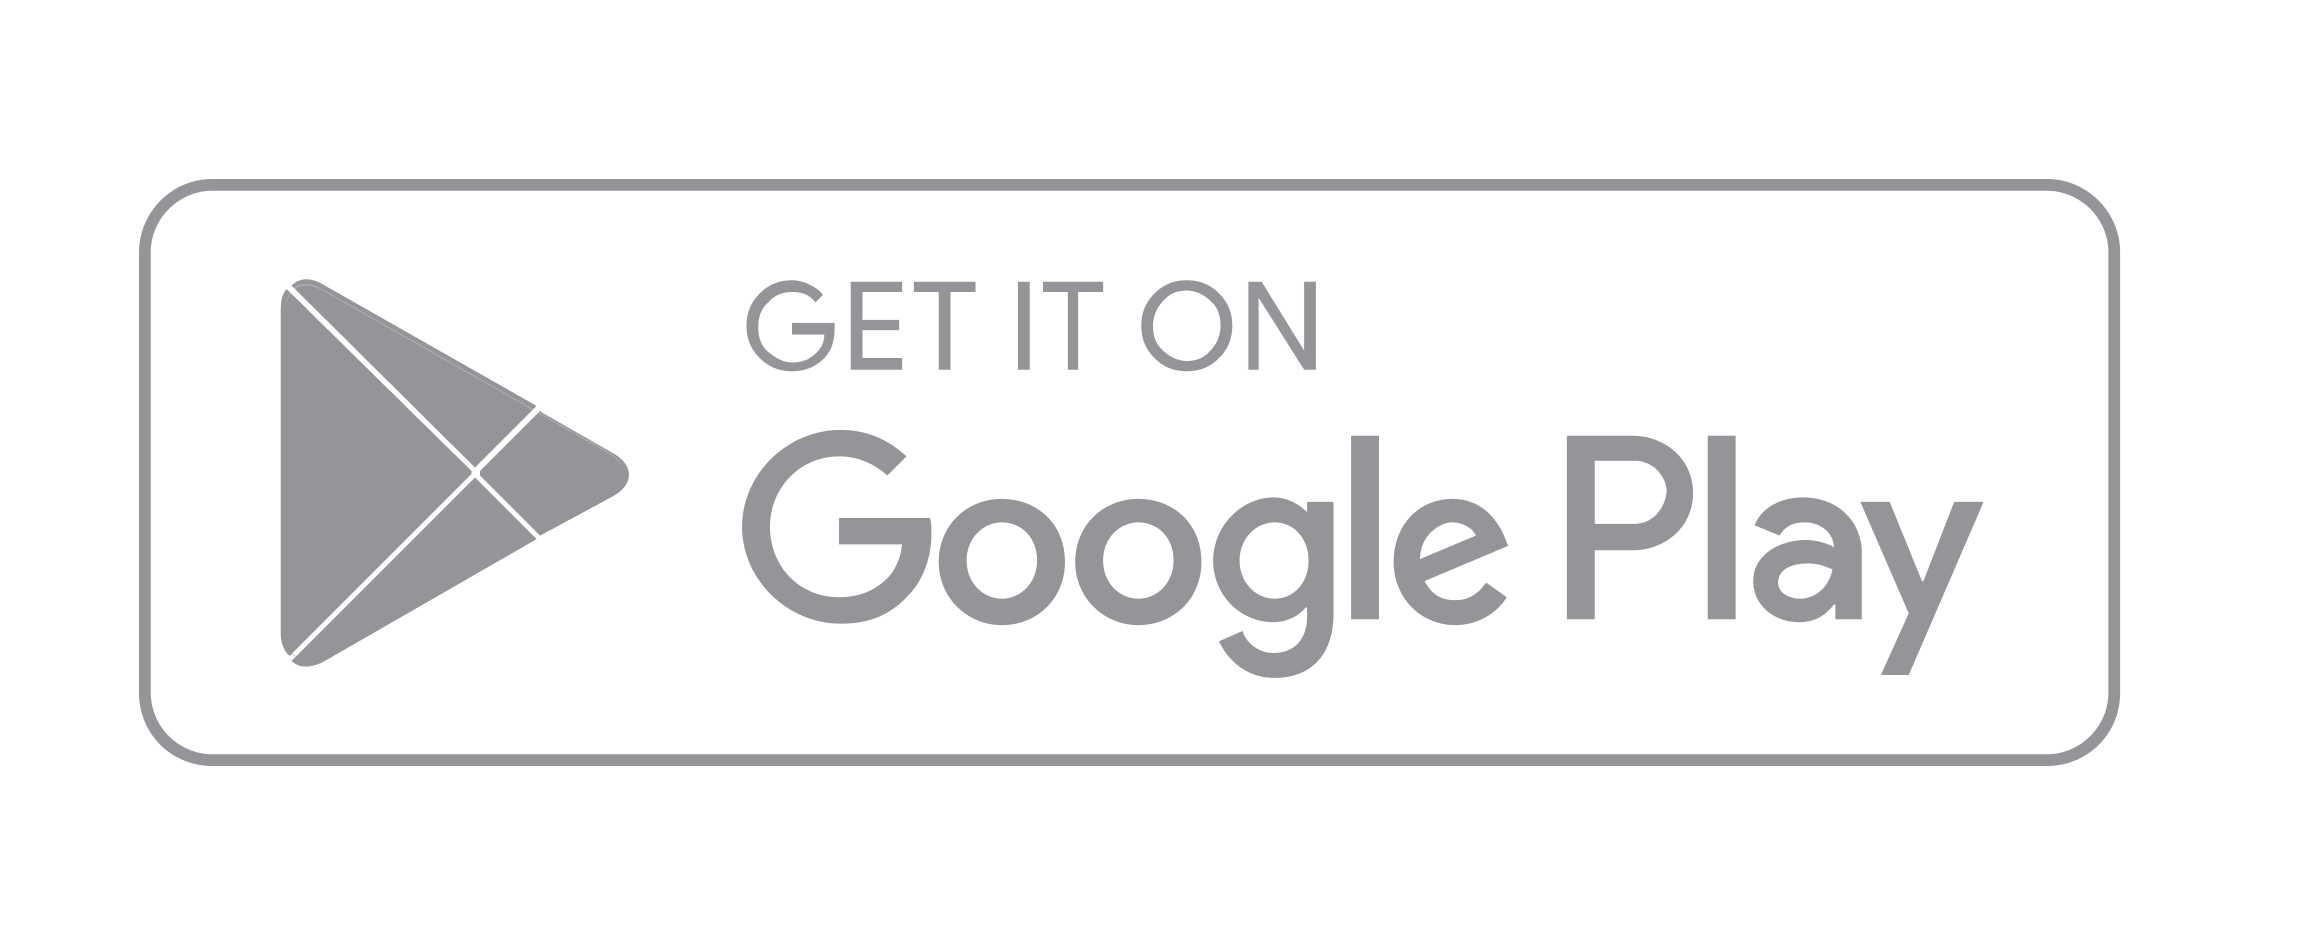 Гугл плей. Google Play logo. Get in Google Play. Доступно в Play Market.